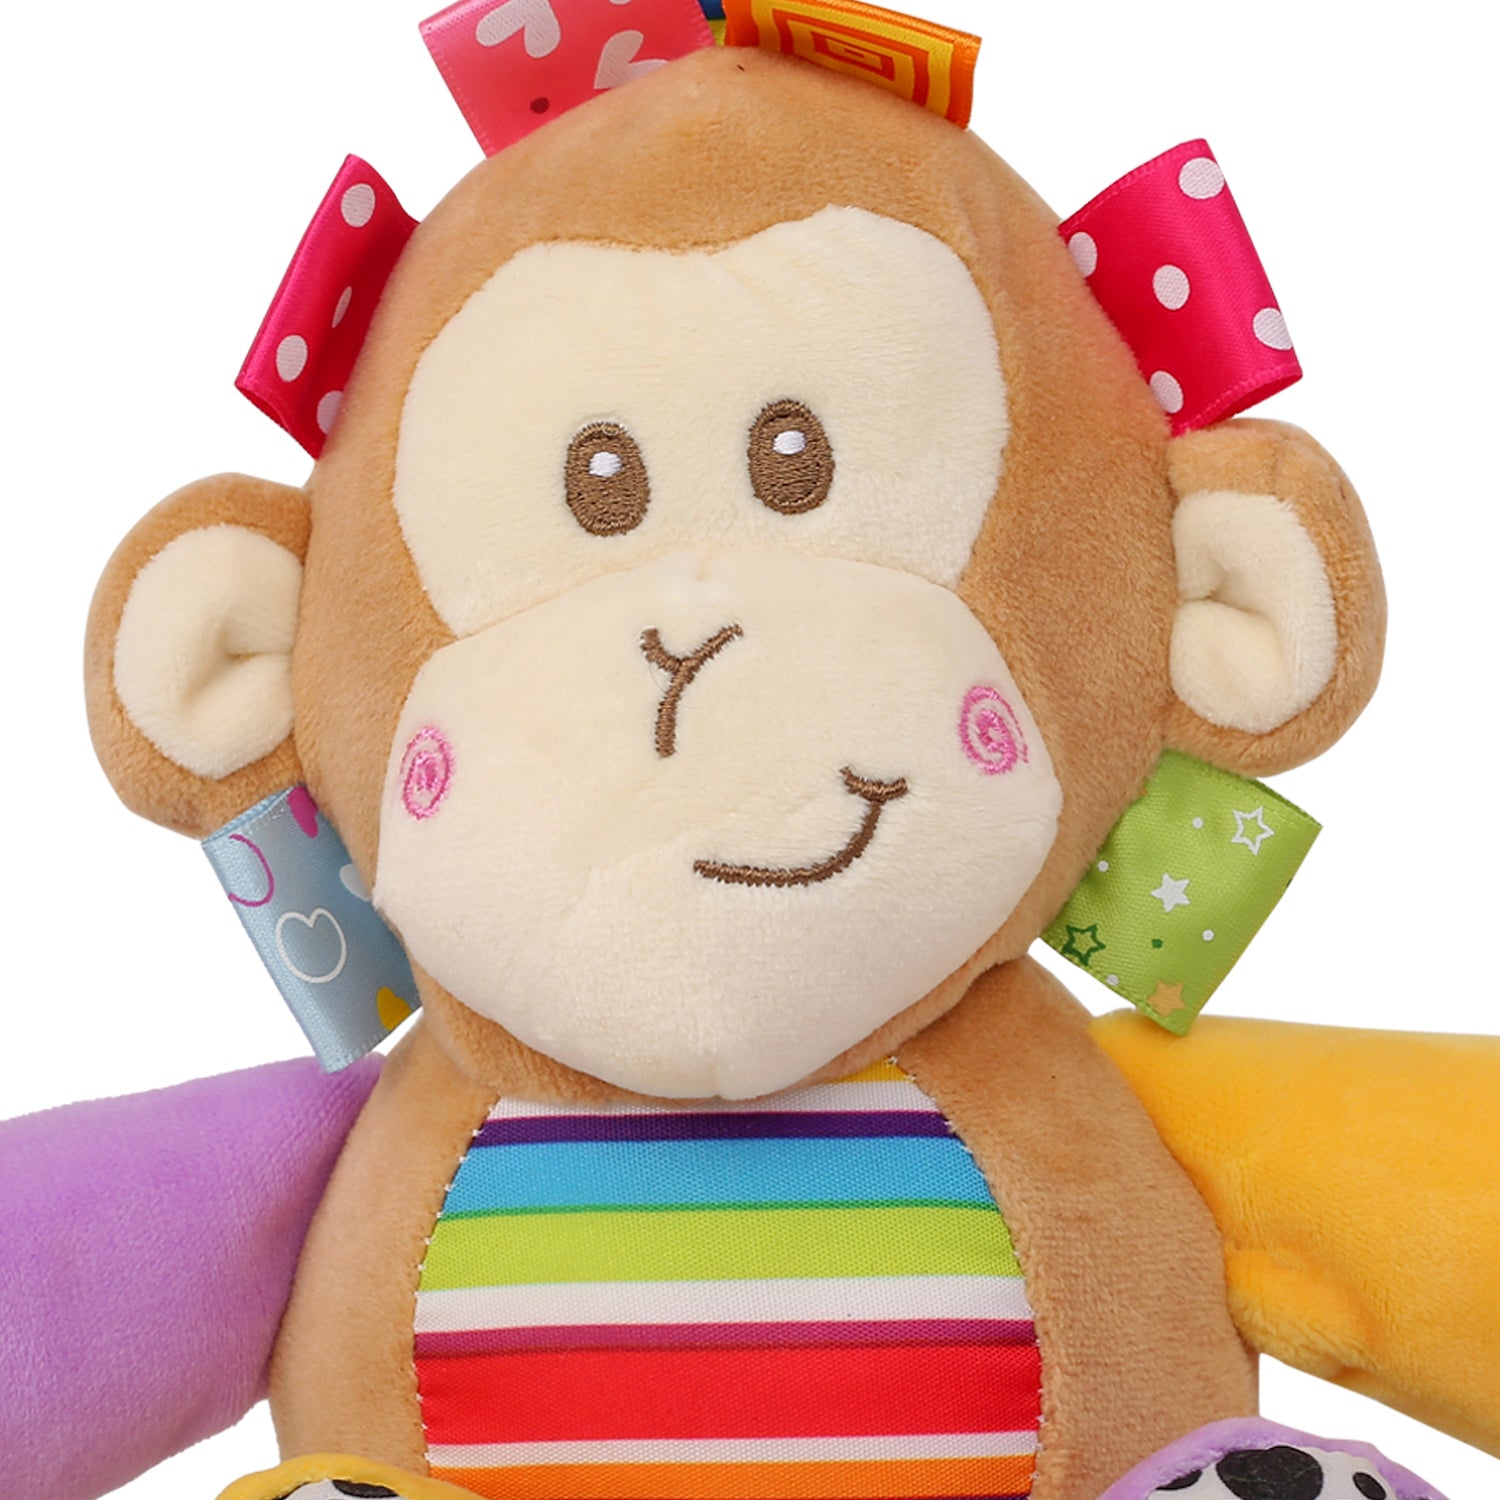 Monkey Multicolour Pulling Toy